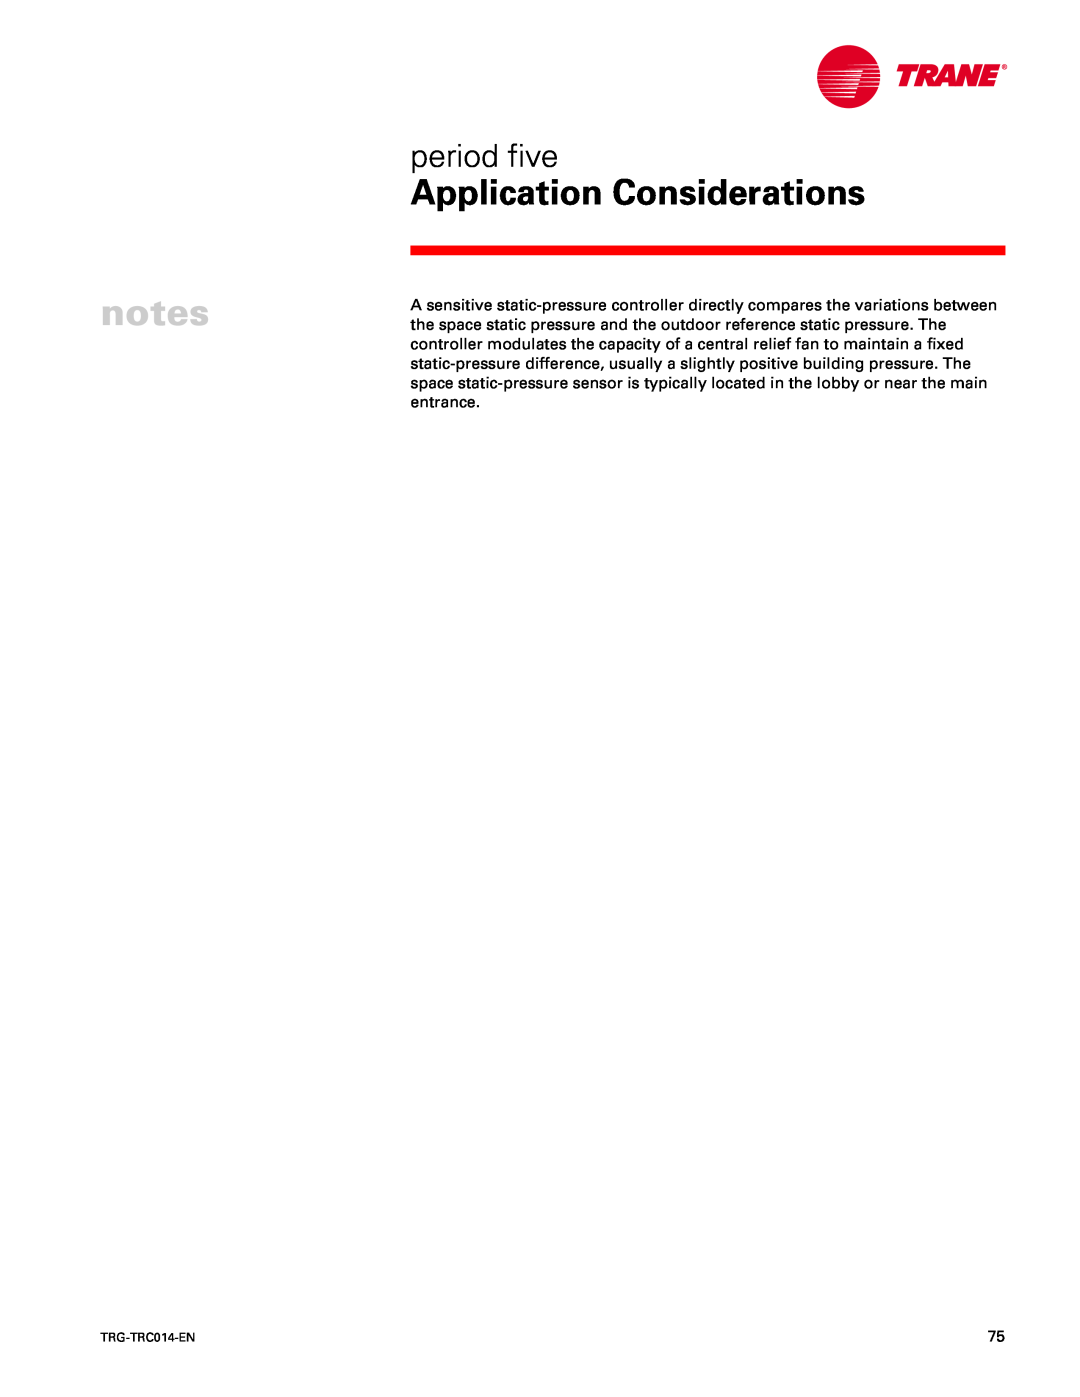 Trane TRG-TRC014-EN manual Application Considerations, period five 